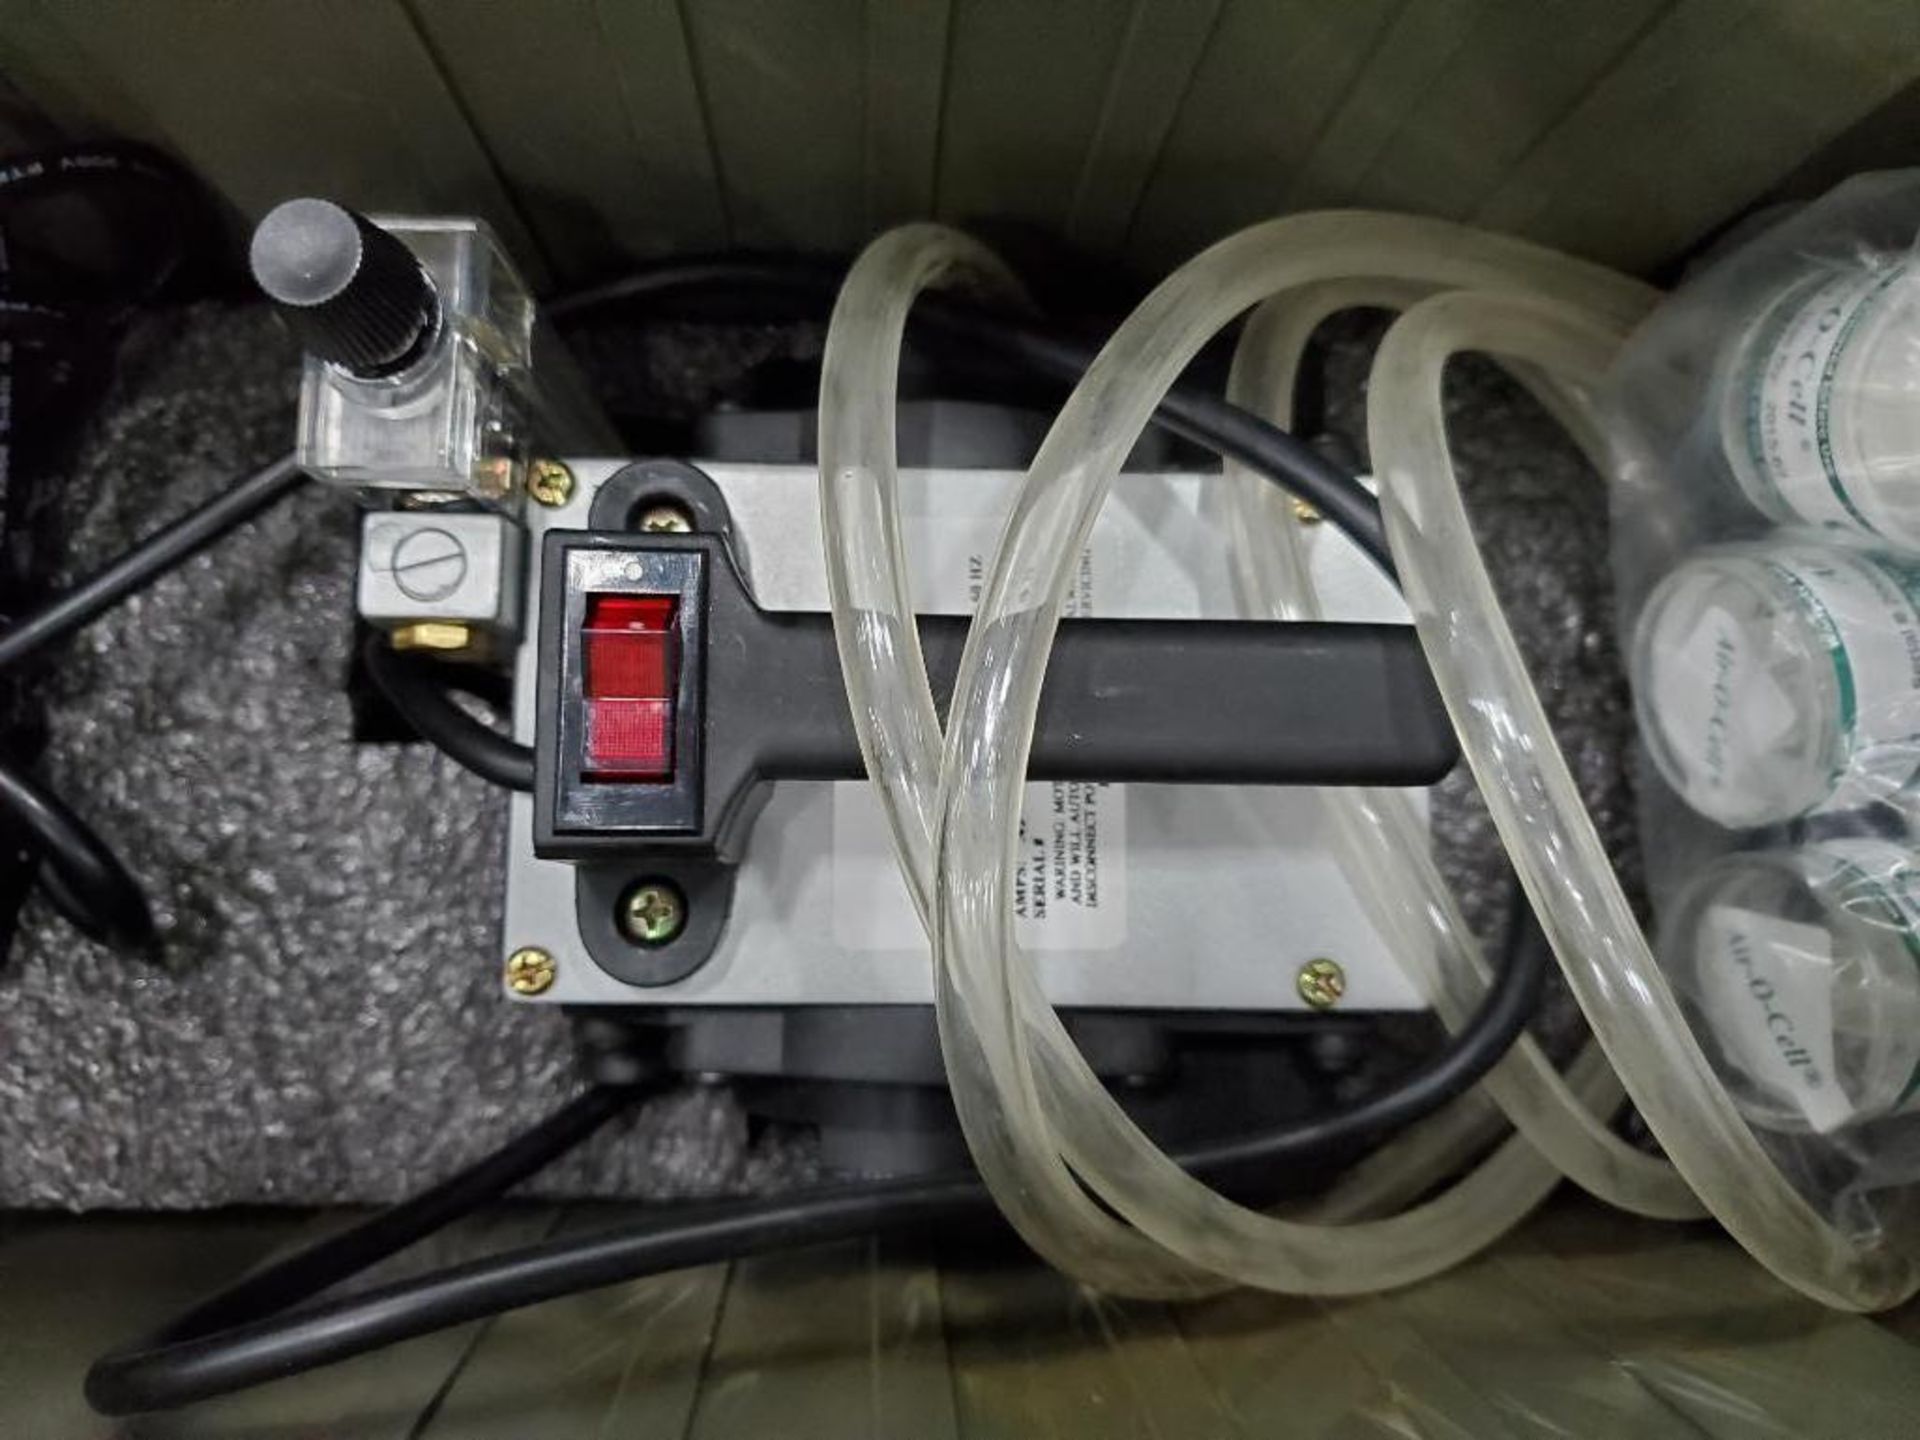 Zefon International Mold Sampler, Oscillating Mold Sampling Pump, 3-33 IPM, 115V, S/N 215748, In Har - Image 2 of 6